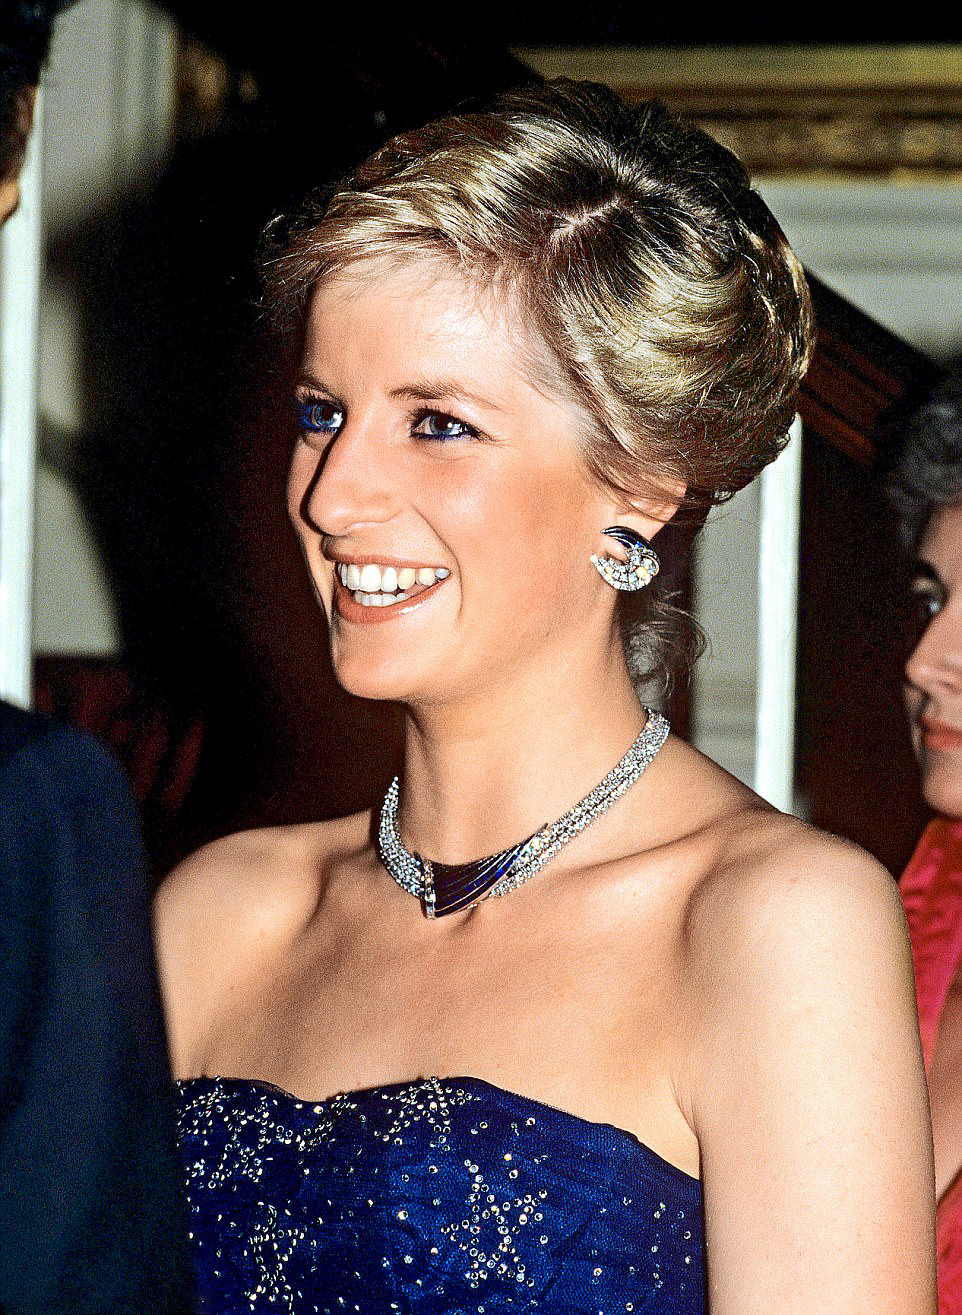 Royal Family Around the World: The Late Princess Diana draped herself